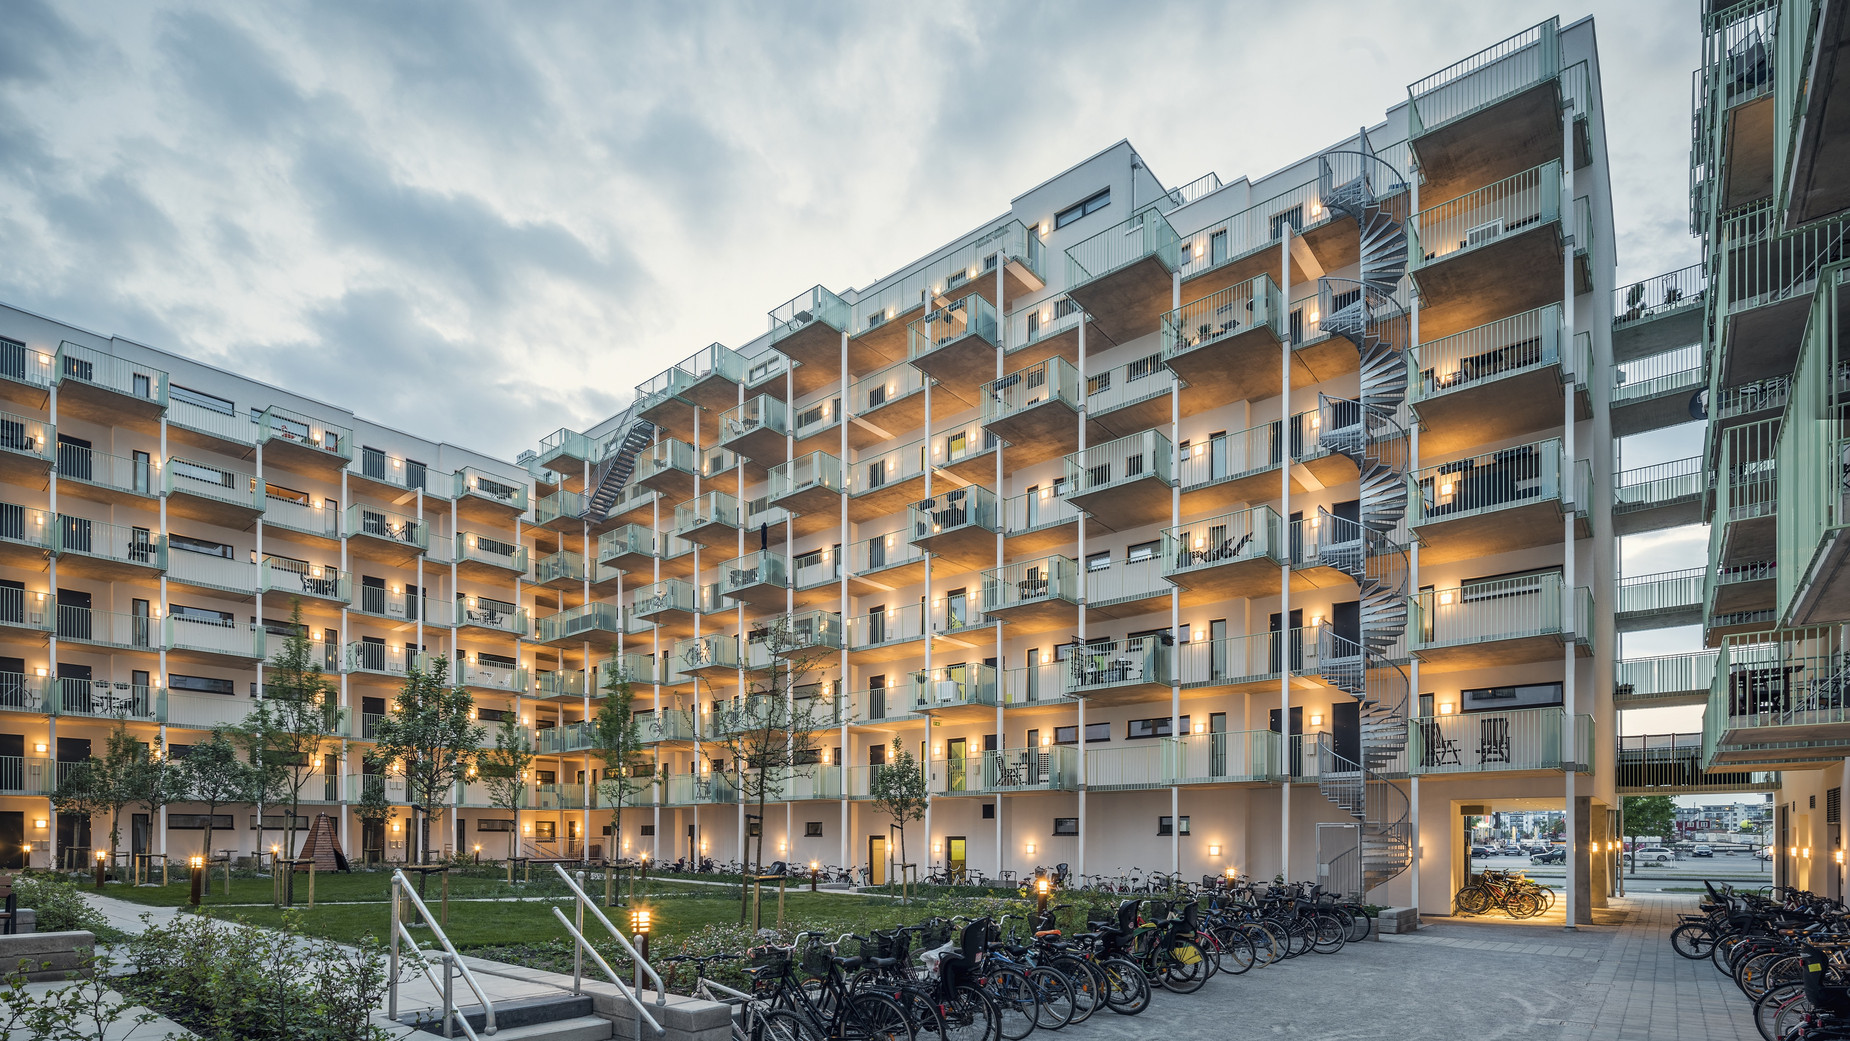  Housing Housing development Landscape Urban space Sjöjungfrun